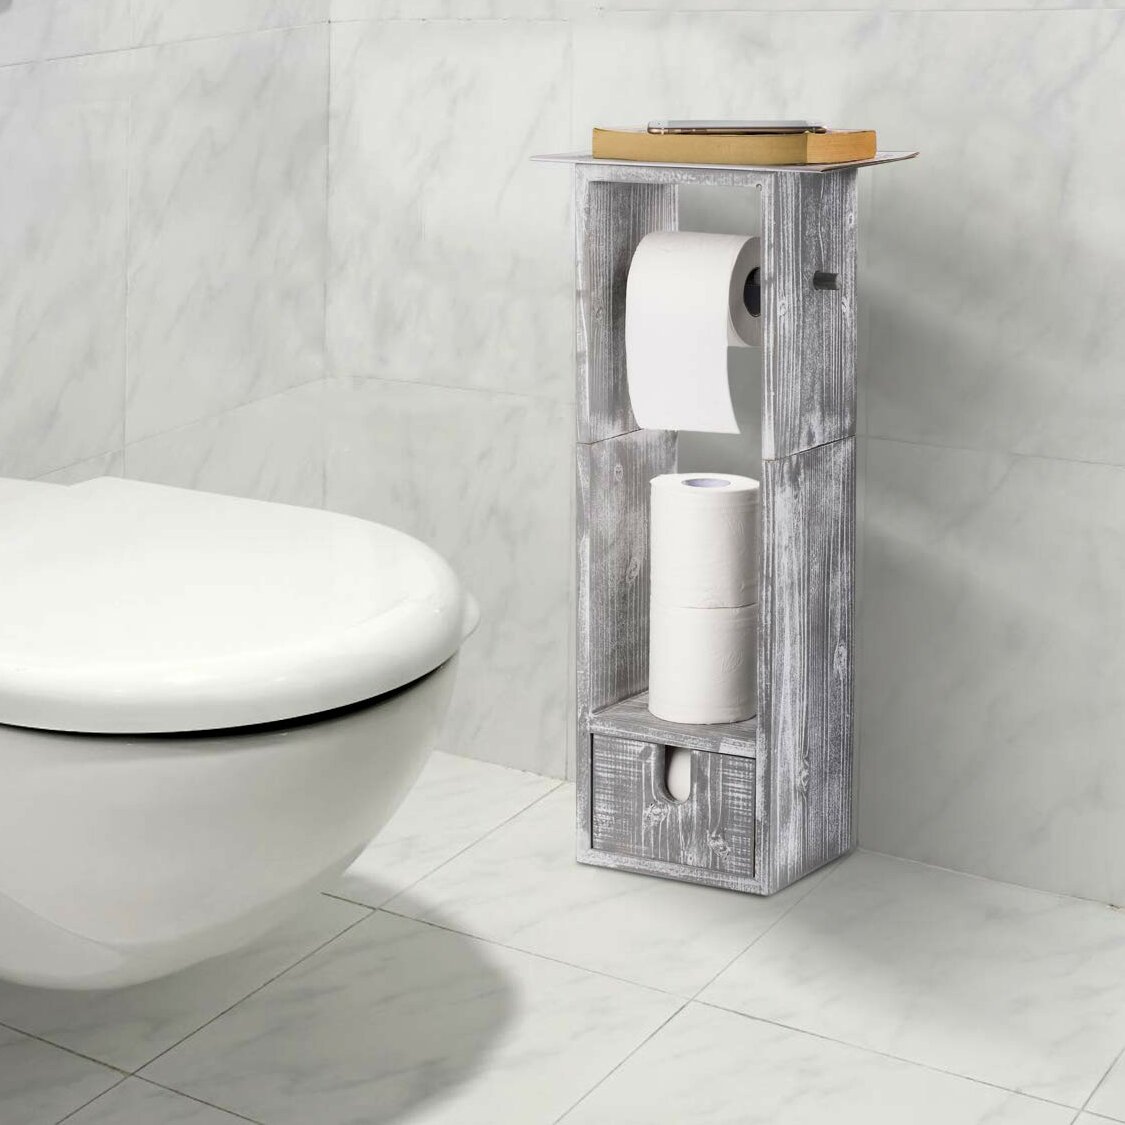 Wooden Free Standing SlimToilet Paper Roll Holder Bathroom 3 Tier Storage Cabinet-White 